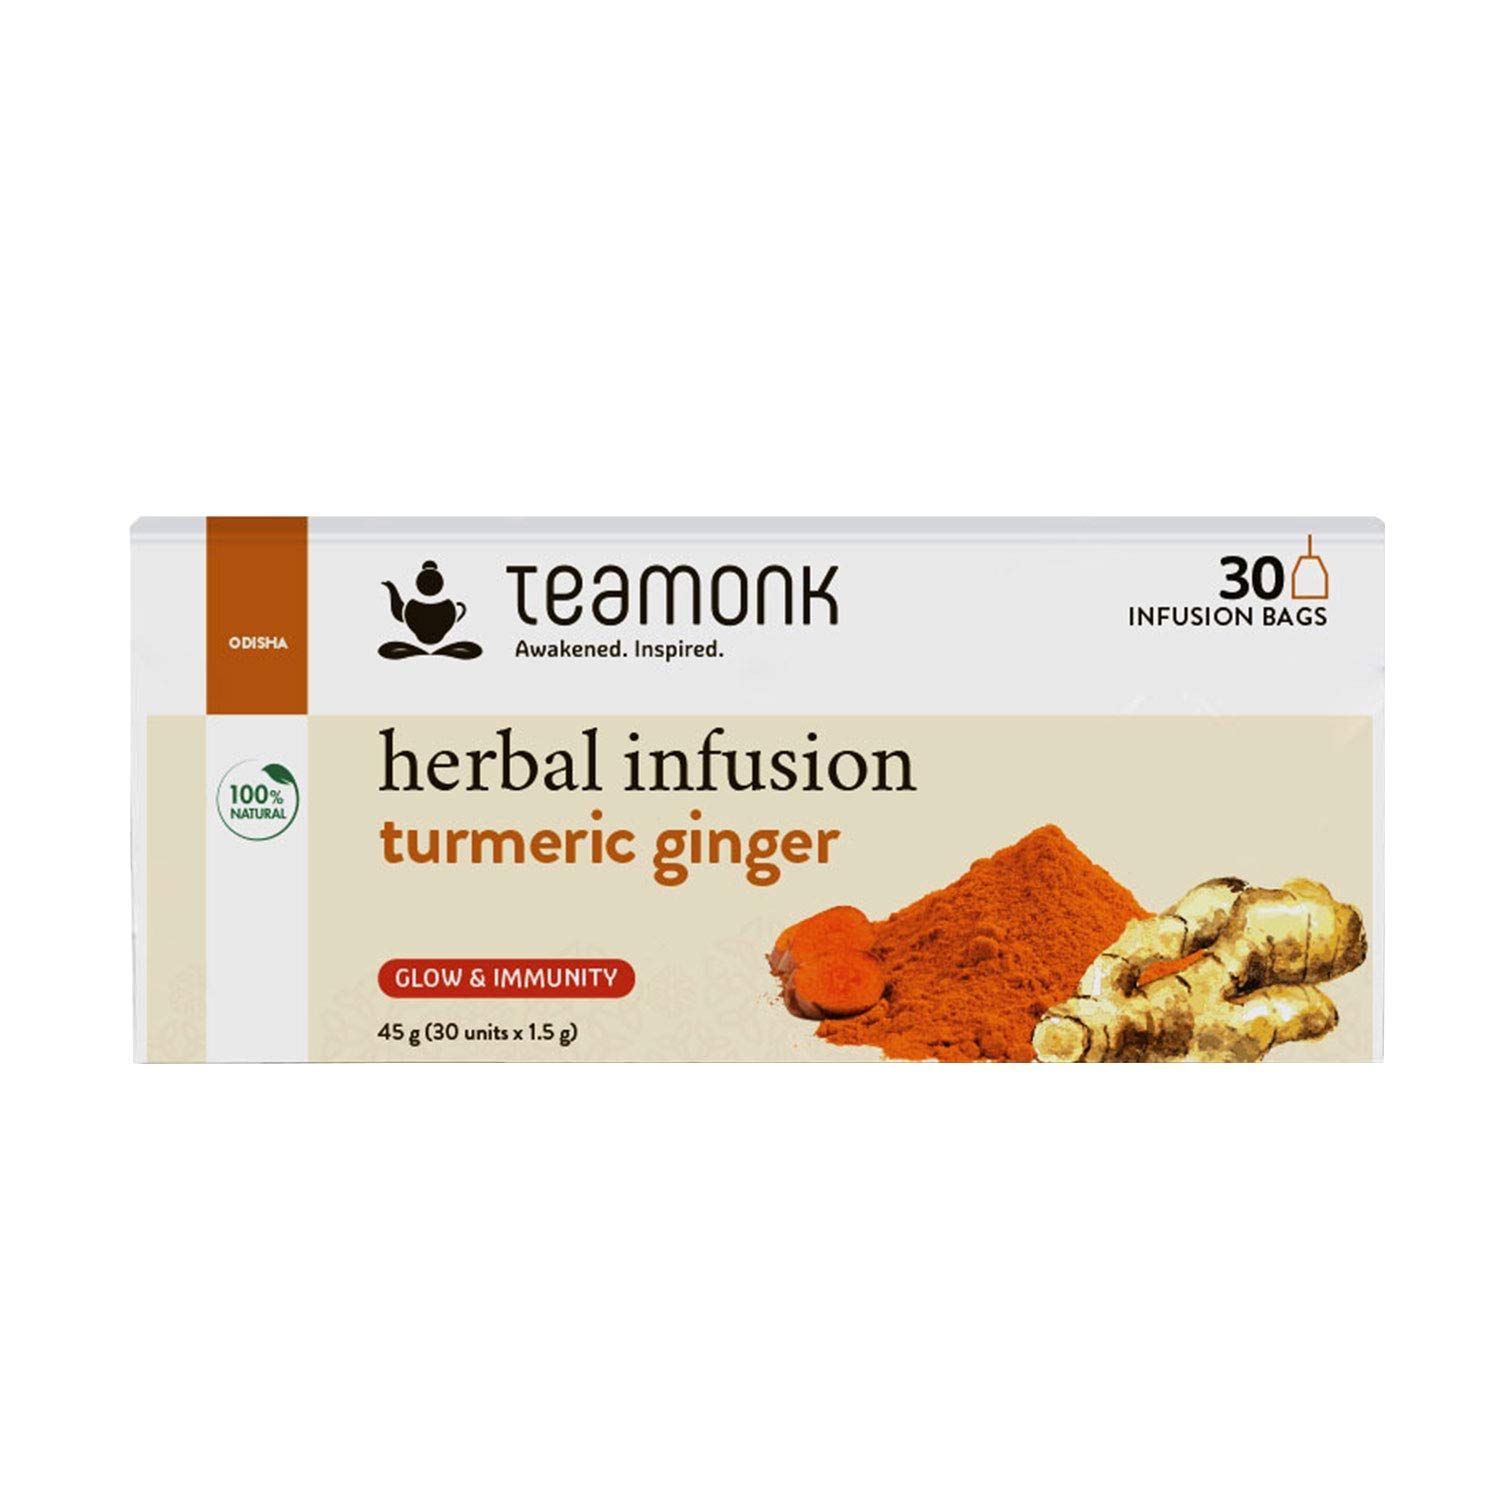 Teamonk Herbal Infusion Turmeric Ginger Image